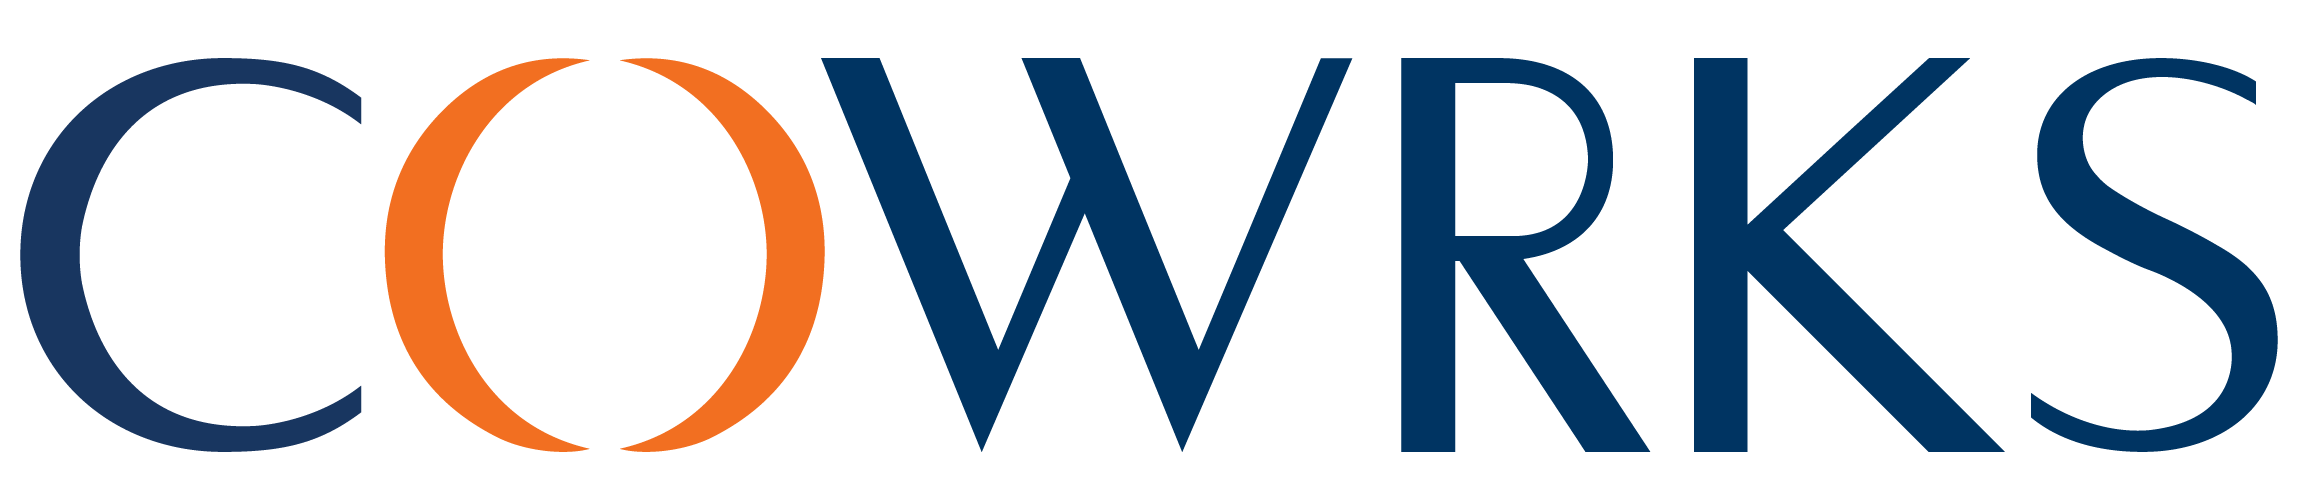 CoWrks Logo